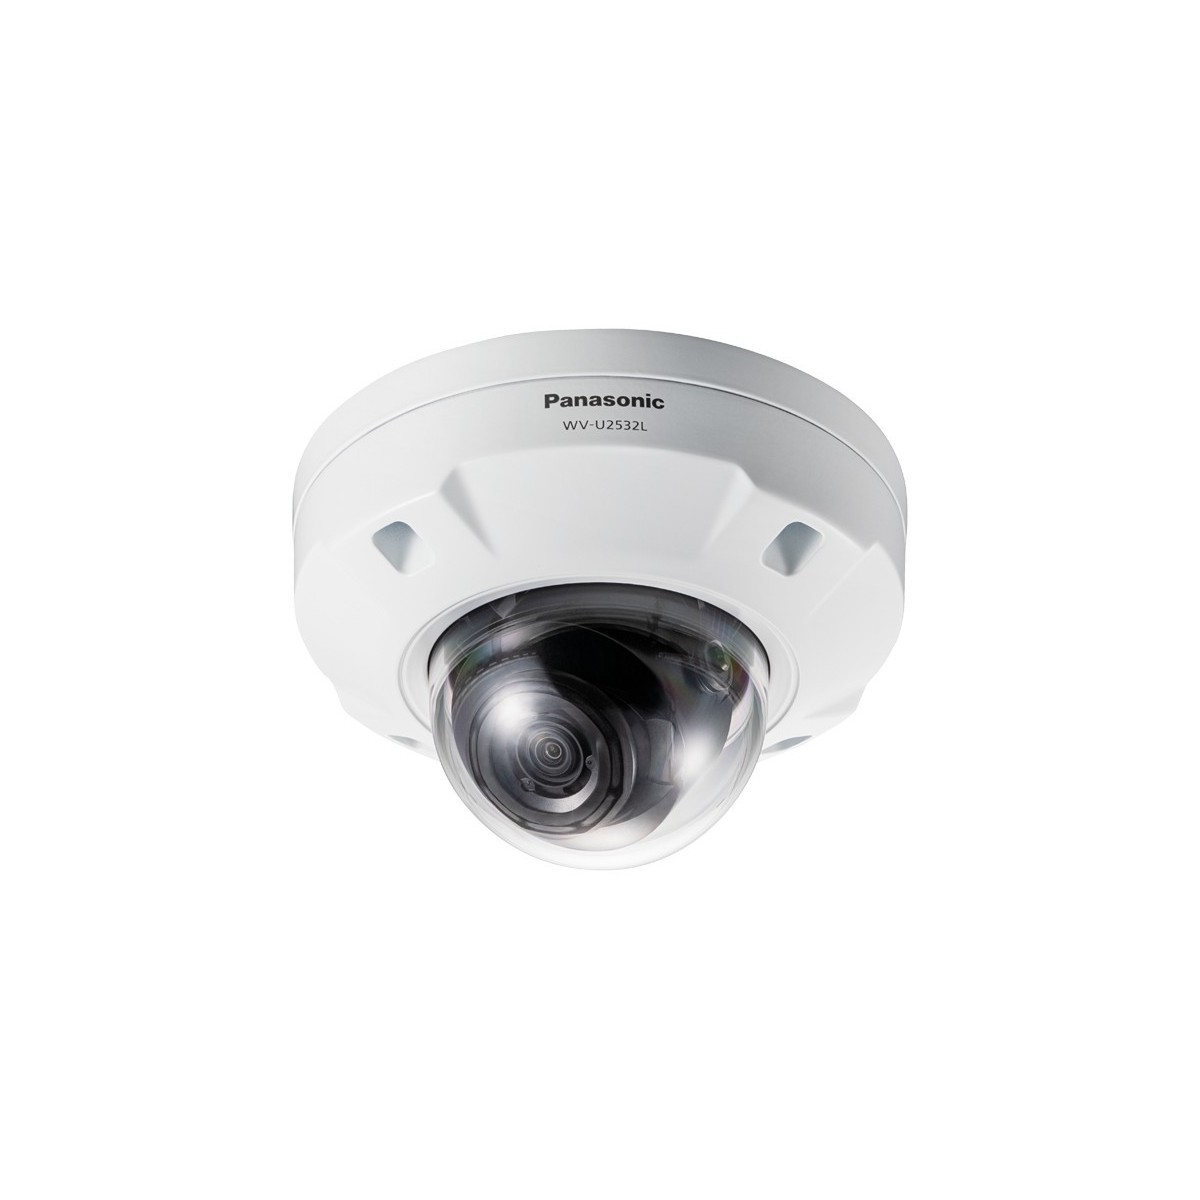 Panasonic WV-U2532L - IP security camera - Outdoor - Wired - UL (UL60950-1) - c-UL (CSA C22.2 No.60950-1) - CE - IEC60950-1 - FC